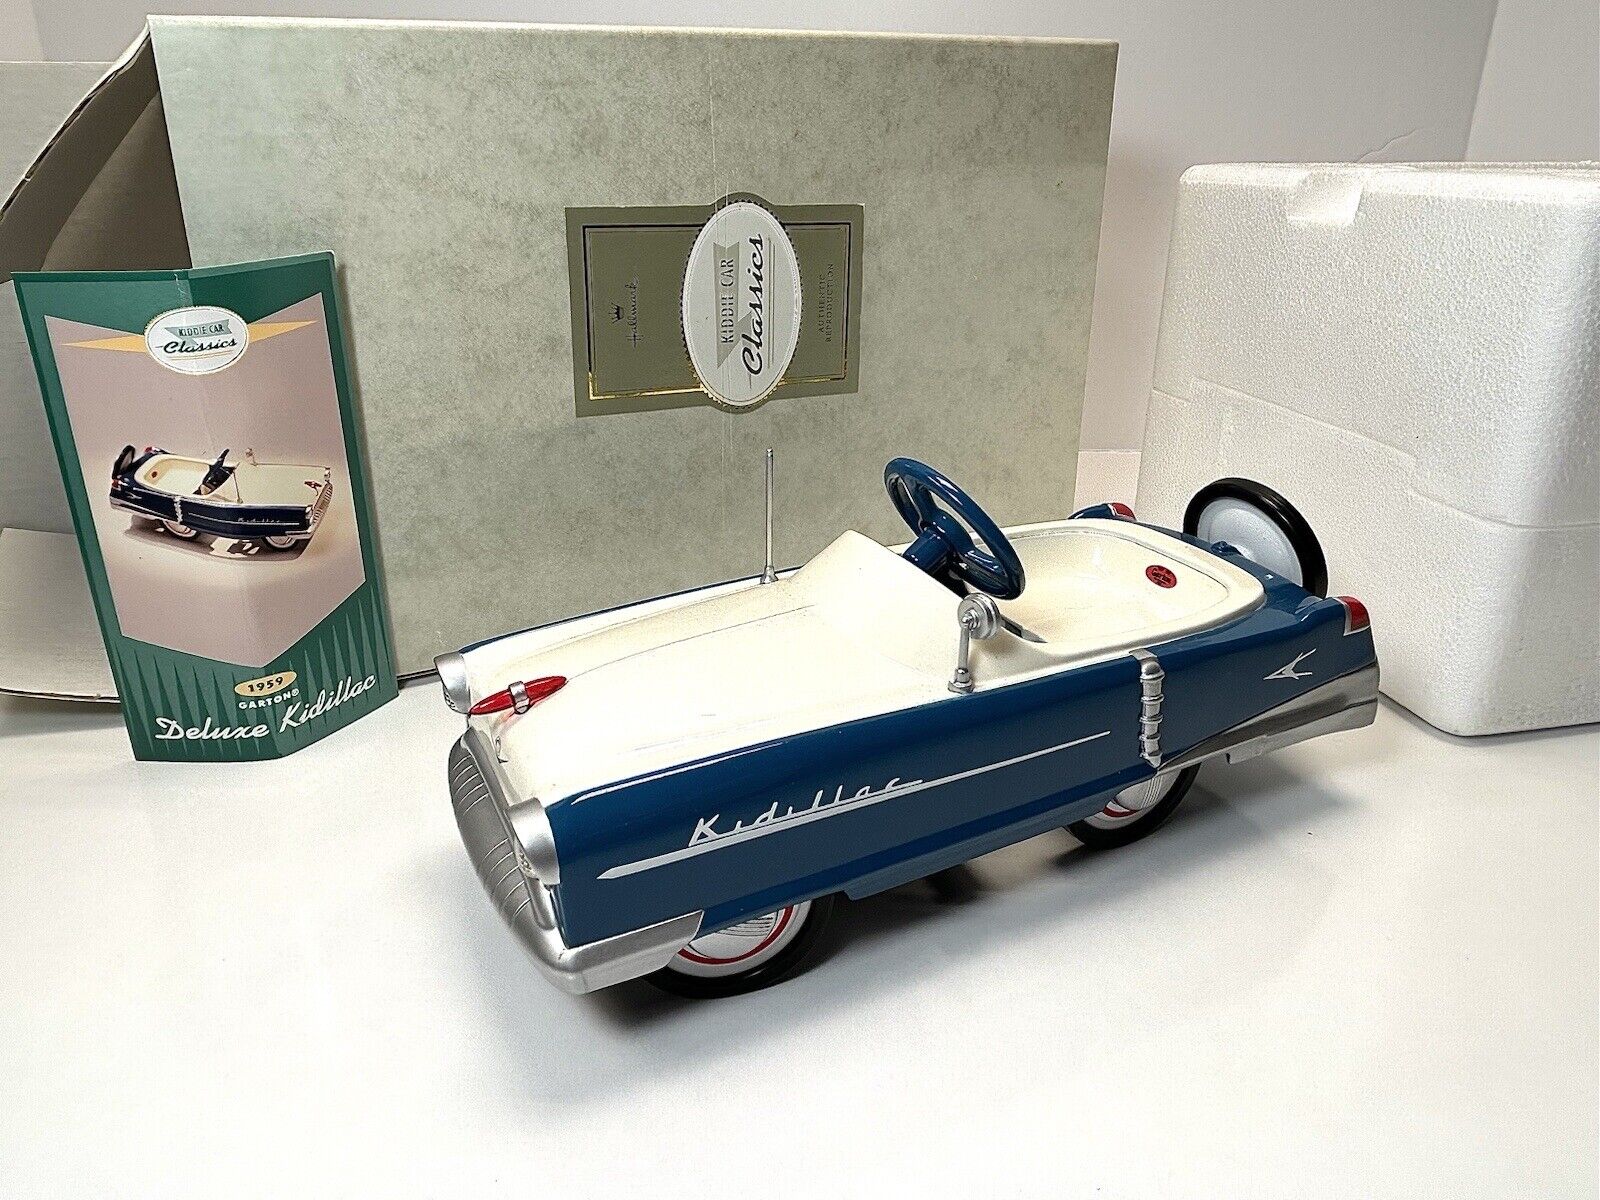 Vtg Hallmark Kiddie Car Classics 1959 Garton Deluxe Kidillac Blue Pedal Car Toy